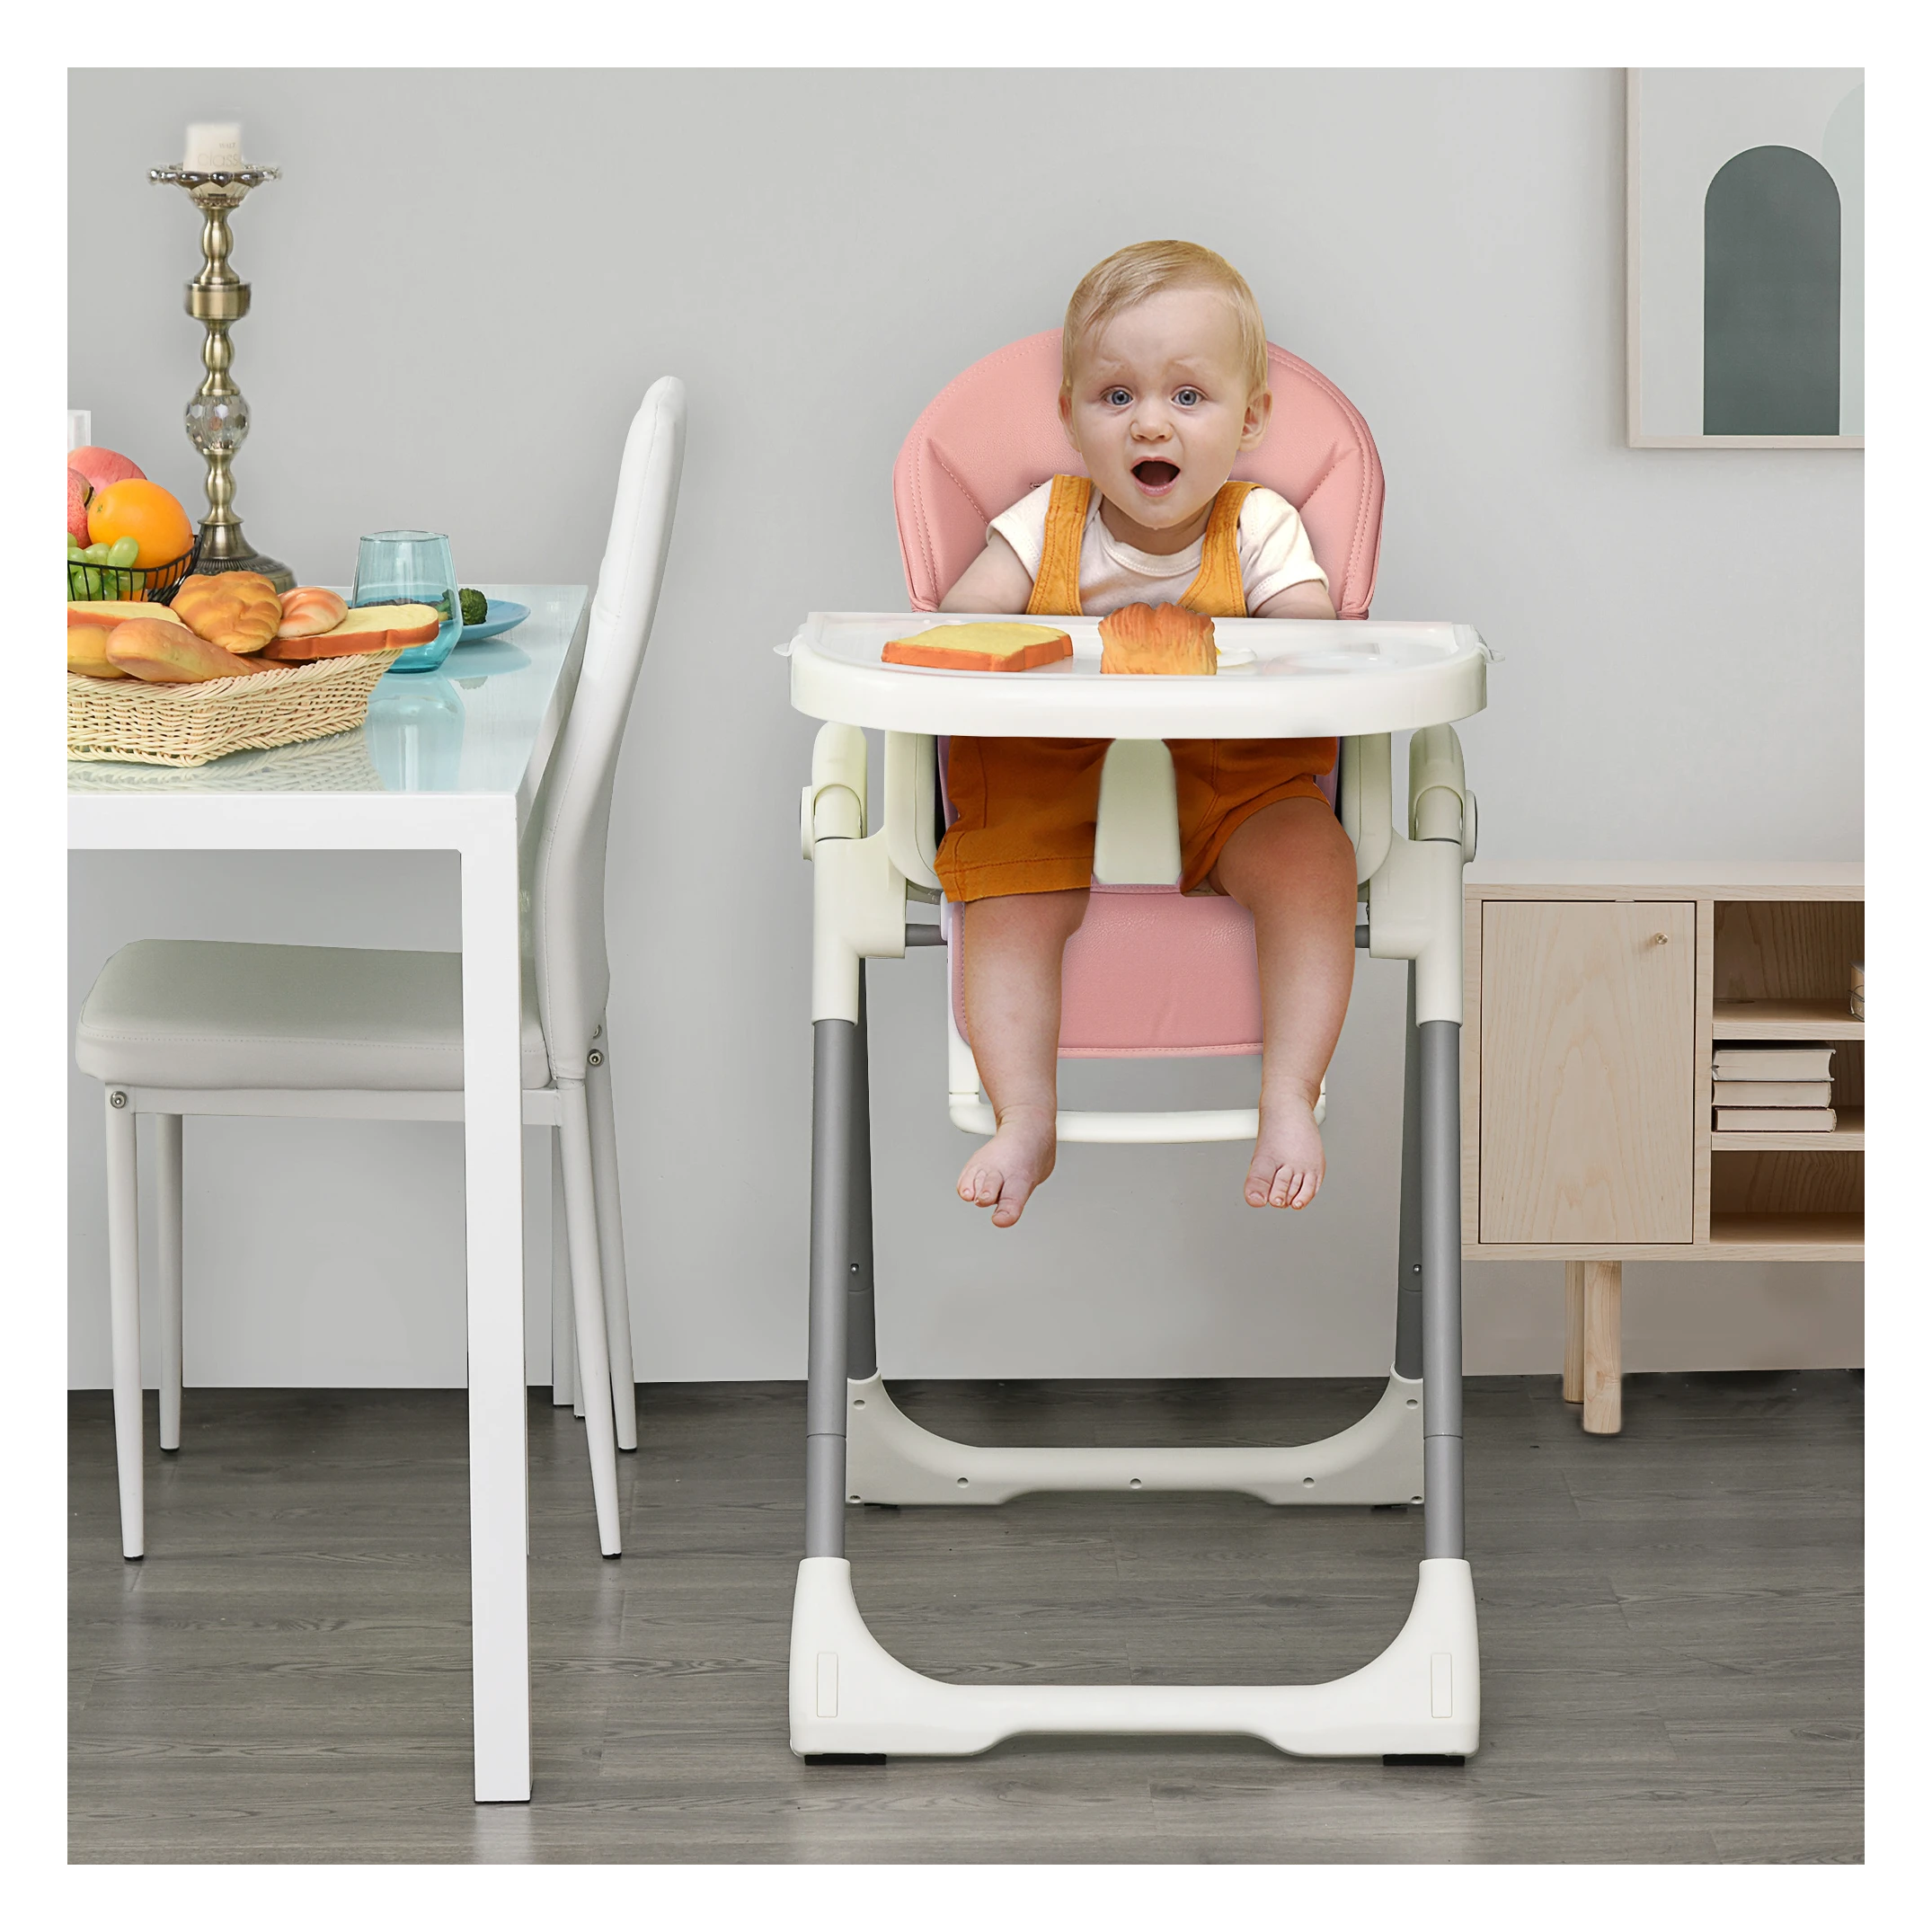 Hoge babystoel kinderstoel met voetensteun kinderstoel tafel met afneembaar plateau in hoogte verstelbaar voor 6-36 maanden PP staal roze 55 x 80 x 104 cm - SimpleDeal.nl